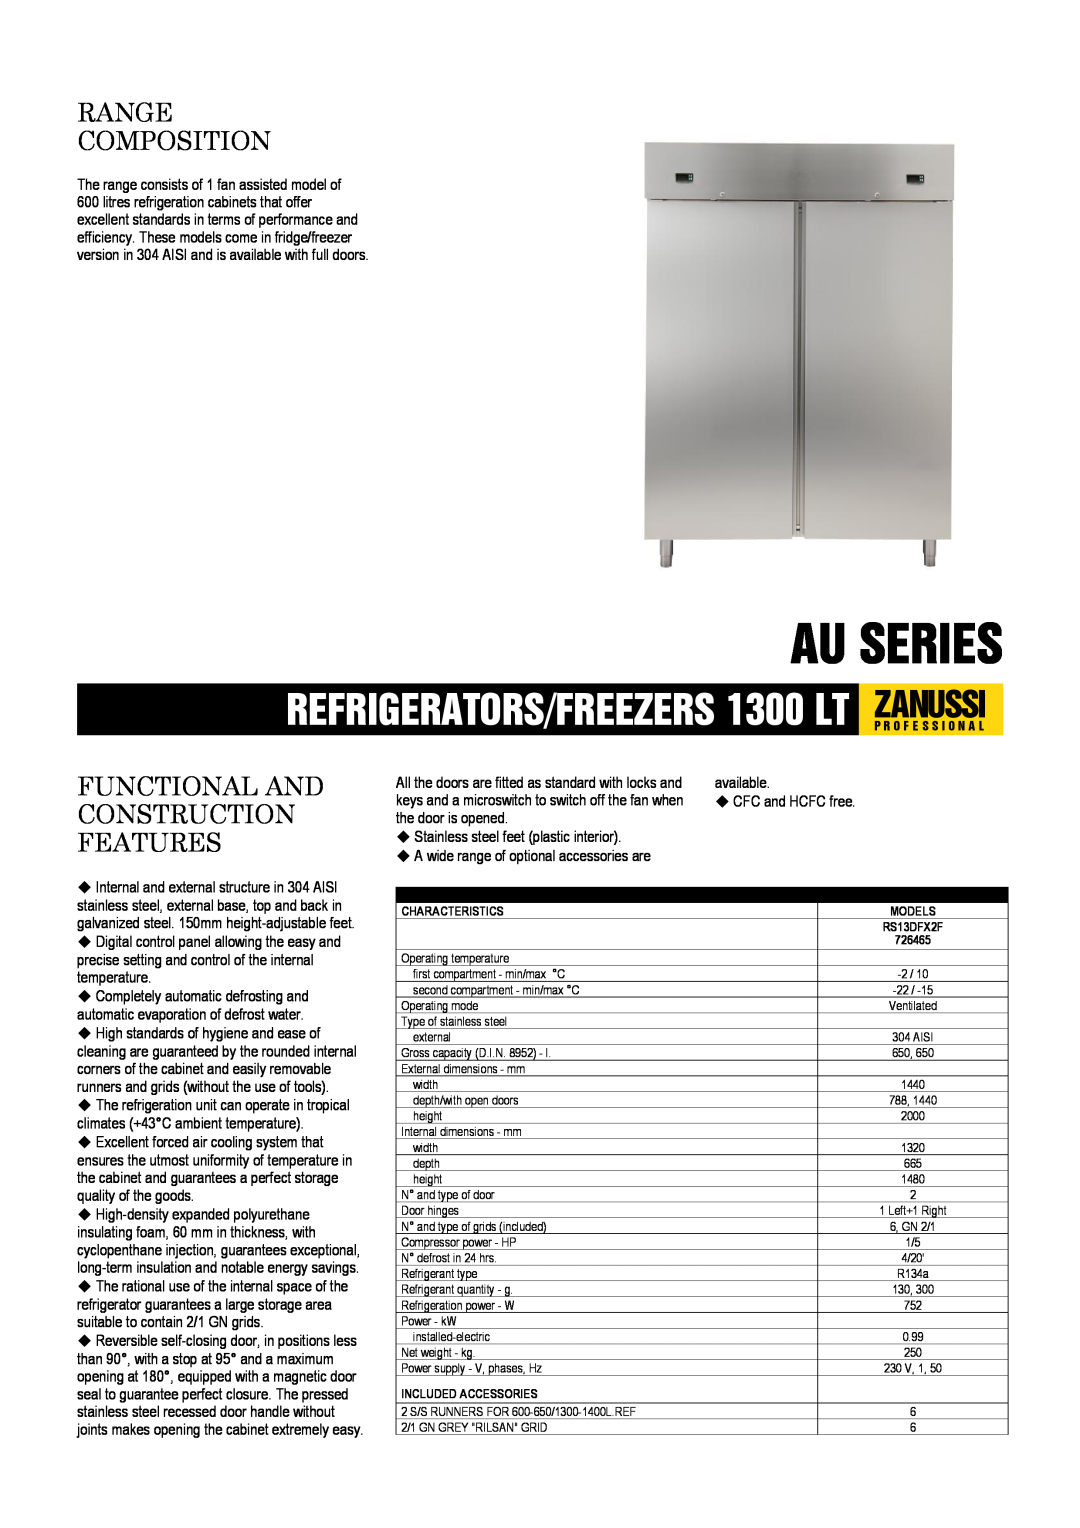 Zanussi RS13DFX2F, 726465 dimensions Au Series, Range Composition, Functional And Construction Features 